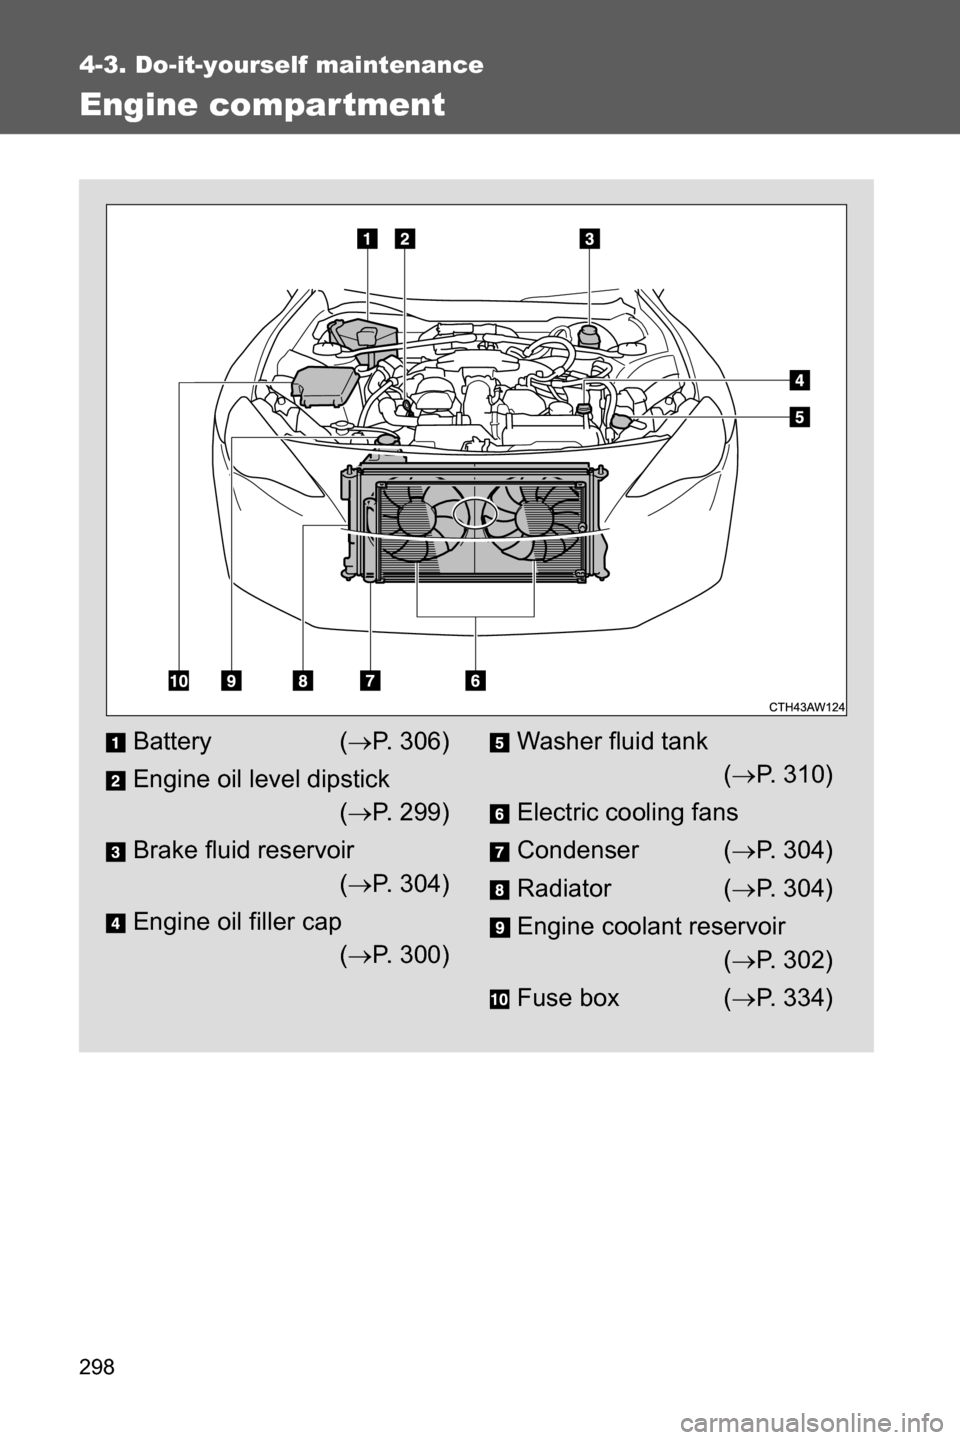 SUBARU BRZ 2016 1.G Owners Manual 298
4-3. Do-it-yourself maintenance
Engine compartment
Battery (�oP. 306)
Engine oil level dipstick
(�oP. 299)
Brake fluid reservoir
(�oP. 304)
Engine oil filler cap
(�oP.  3 0 0 )Washer fluid tank
(�